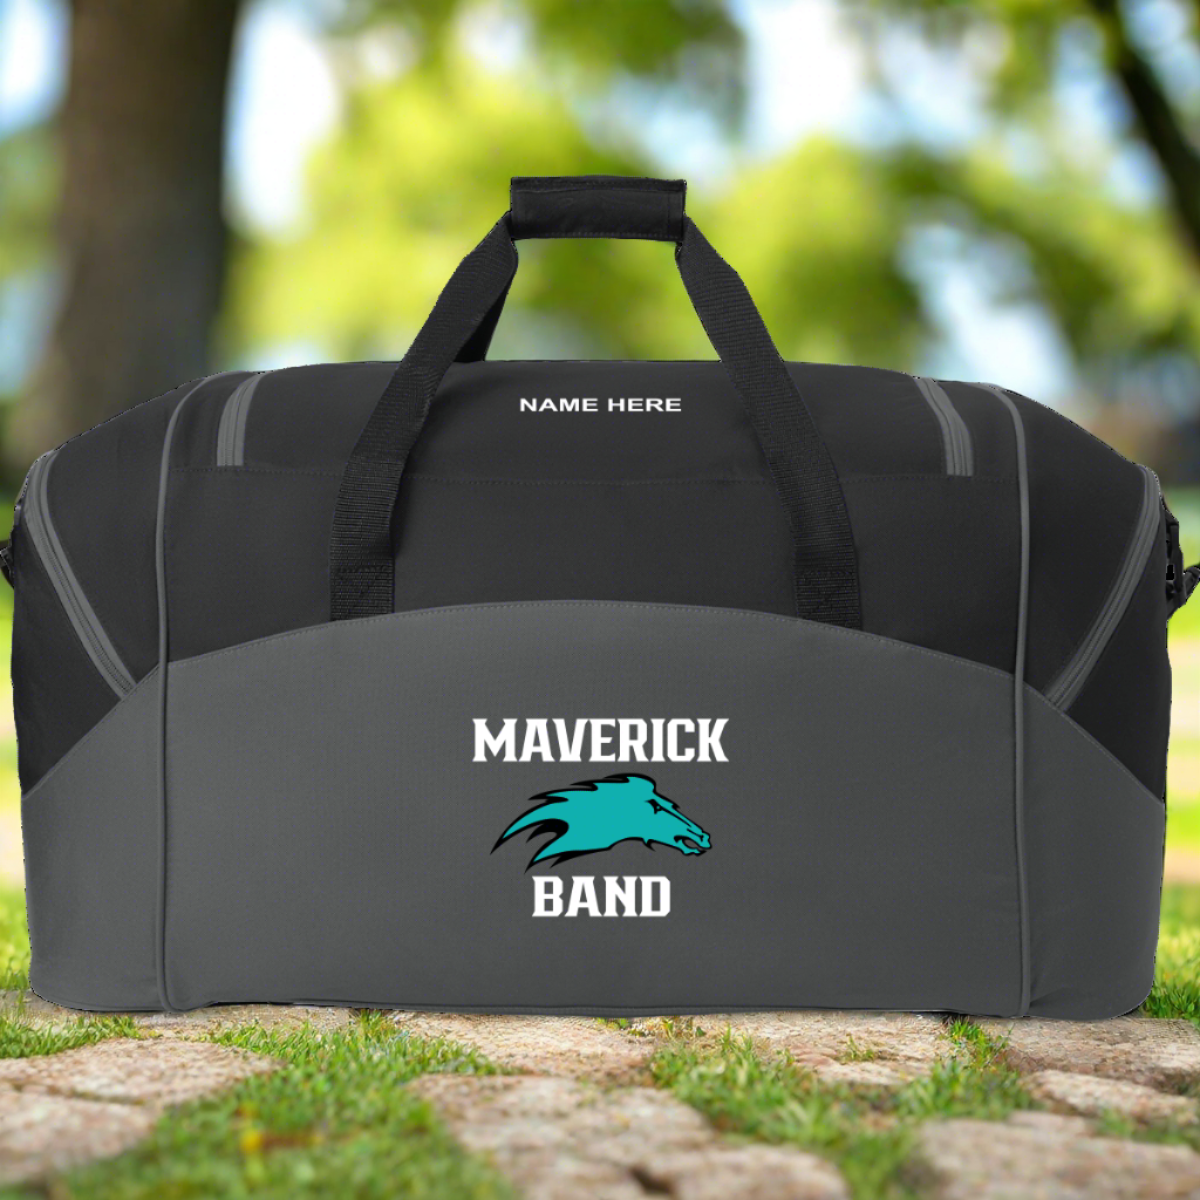 Maverick Tote bag - REQUIRED (1)